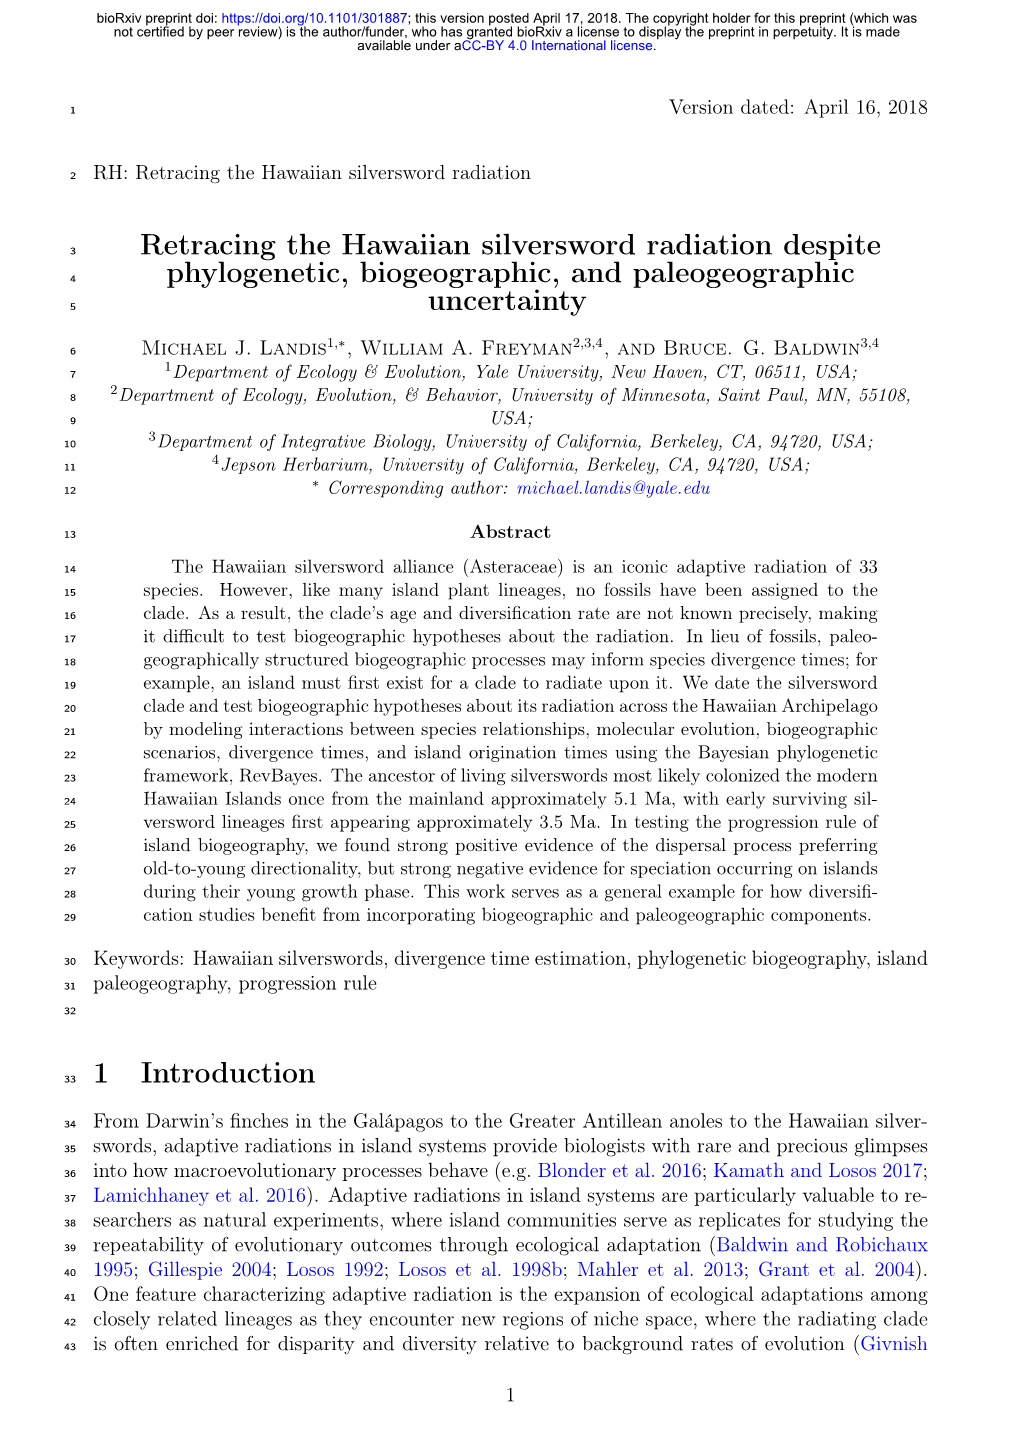 Retracing the Hawaiian Silversword Radiation Despite Phylogenetic